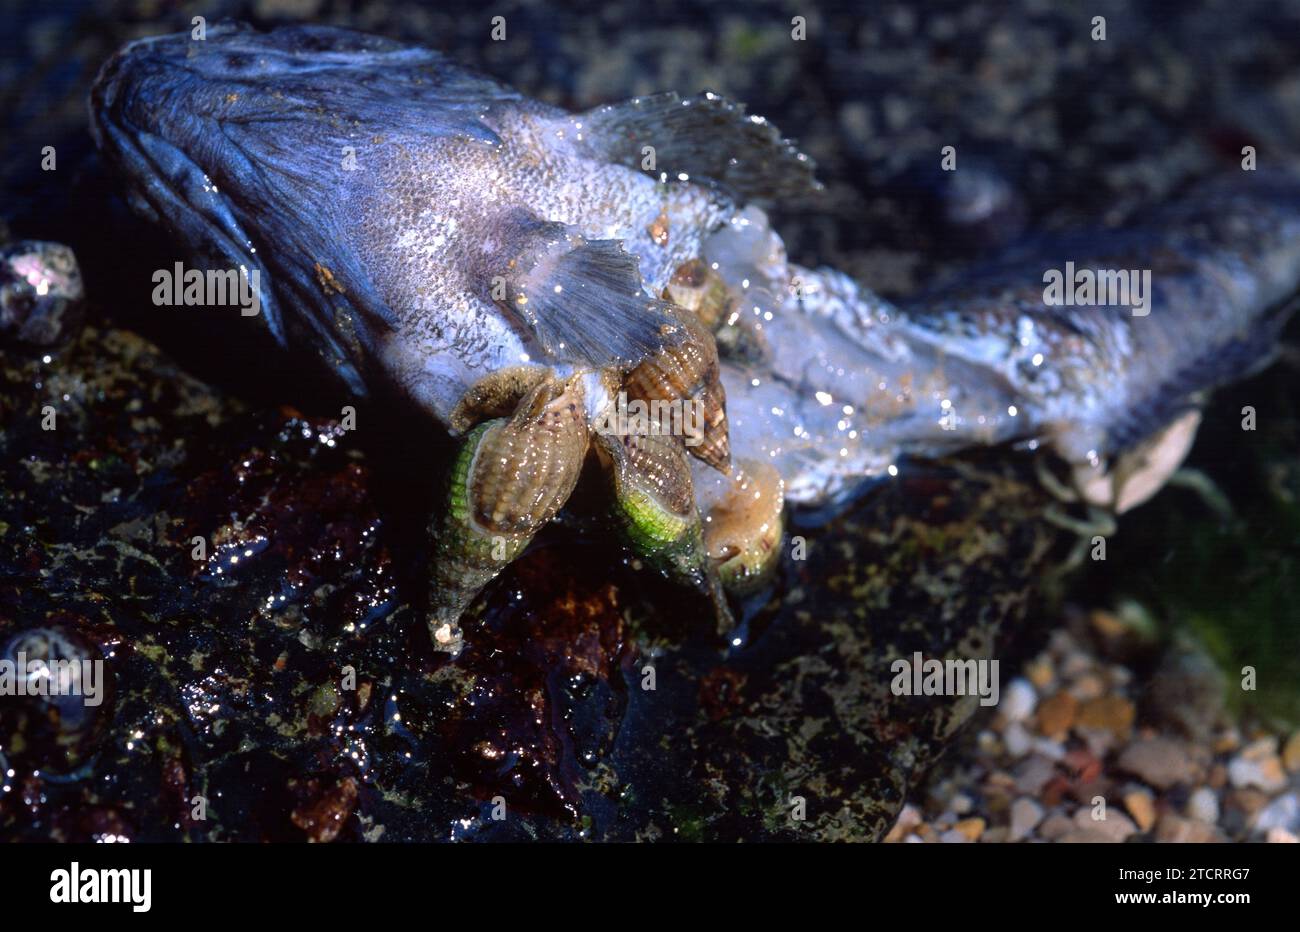 Thick-lipped dogwhelk (Hinia incrassata or Tritia incrassata) is a carnivorous marine snail. This photo was taken in Saint Jean de Luz, France. Stock Photo